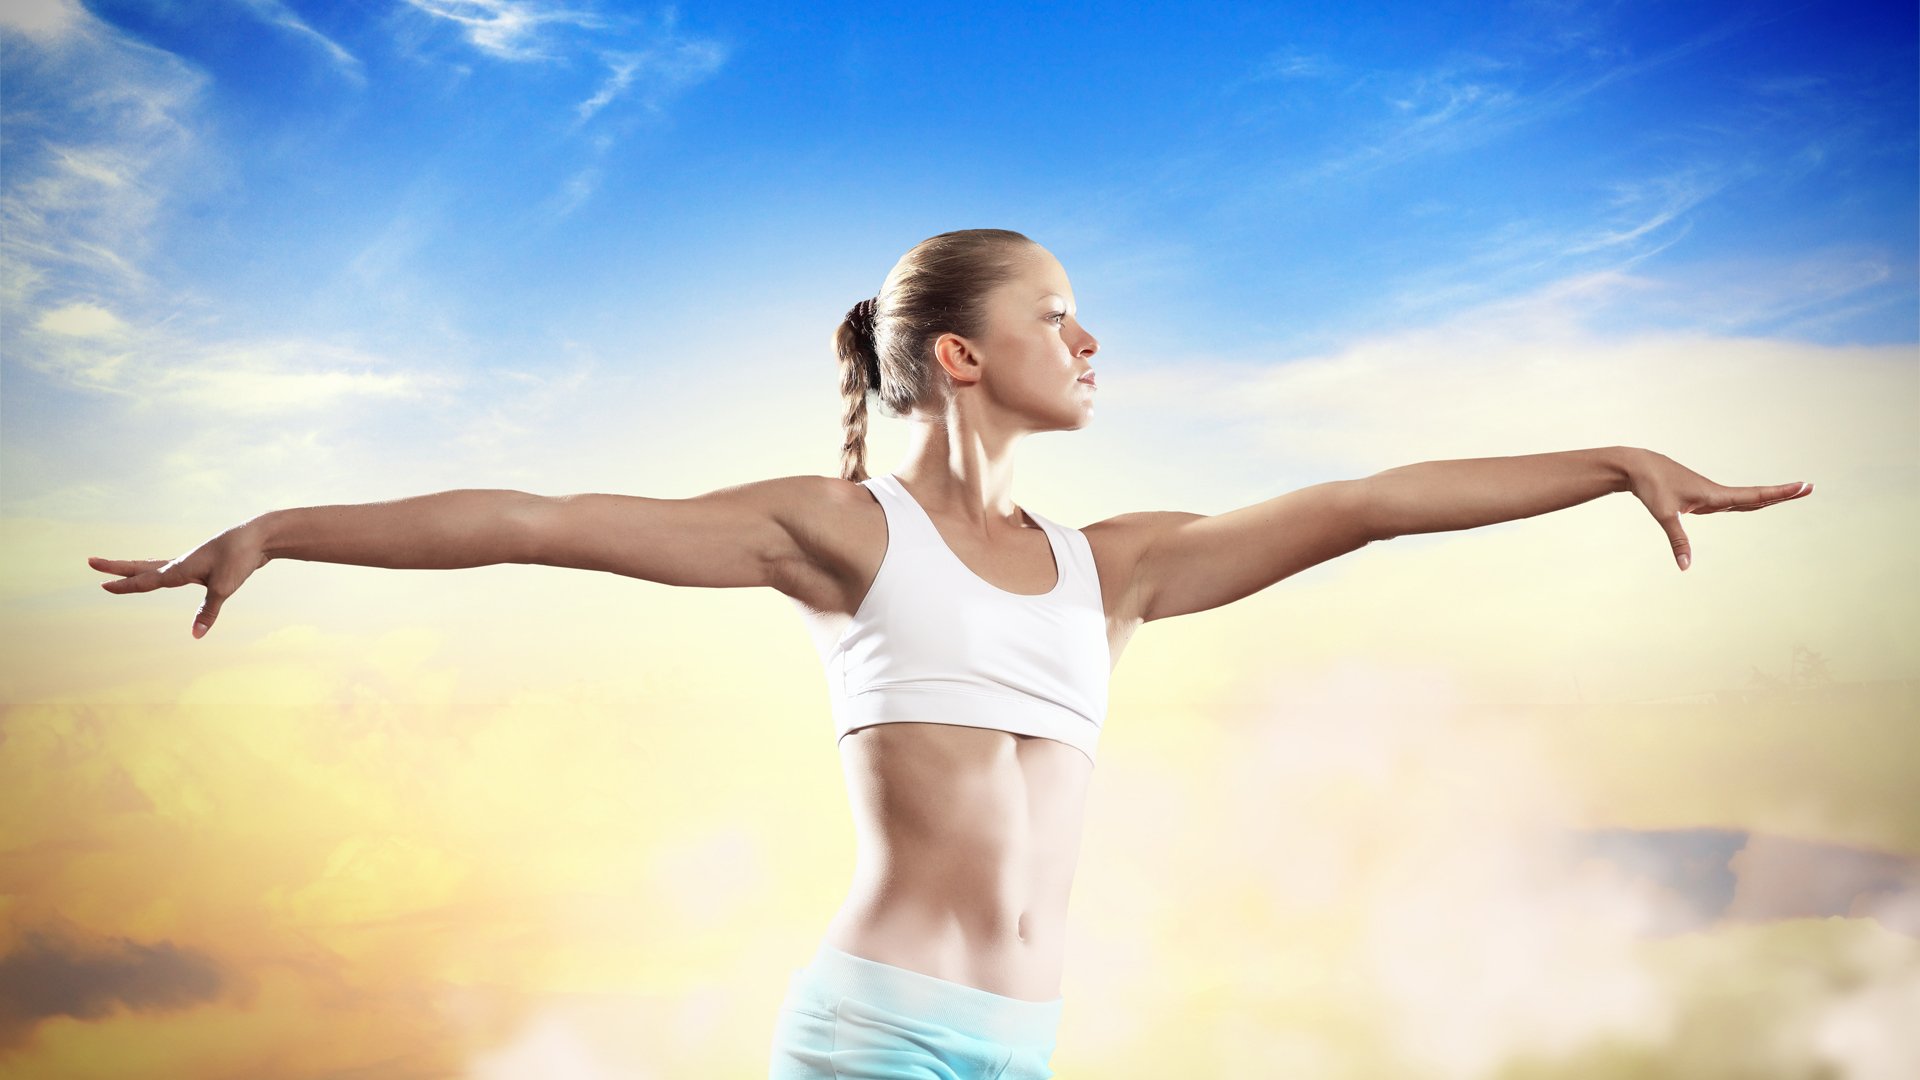 Women Fitness HD Photos Download Free Desktop Wallpaper Images